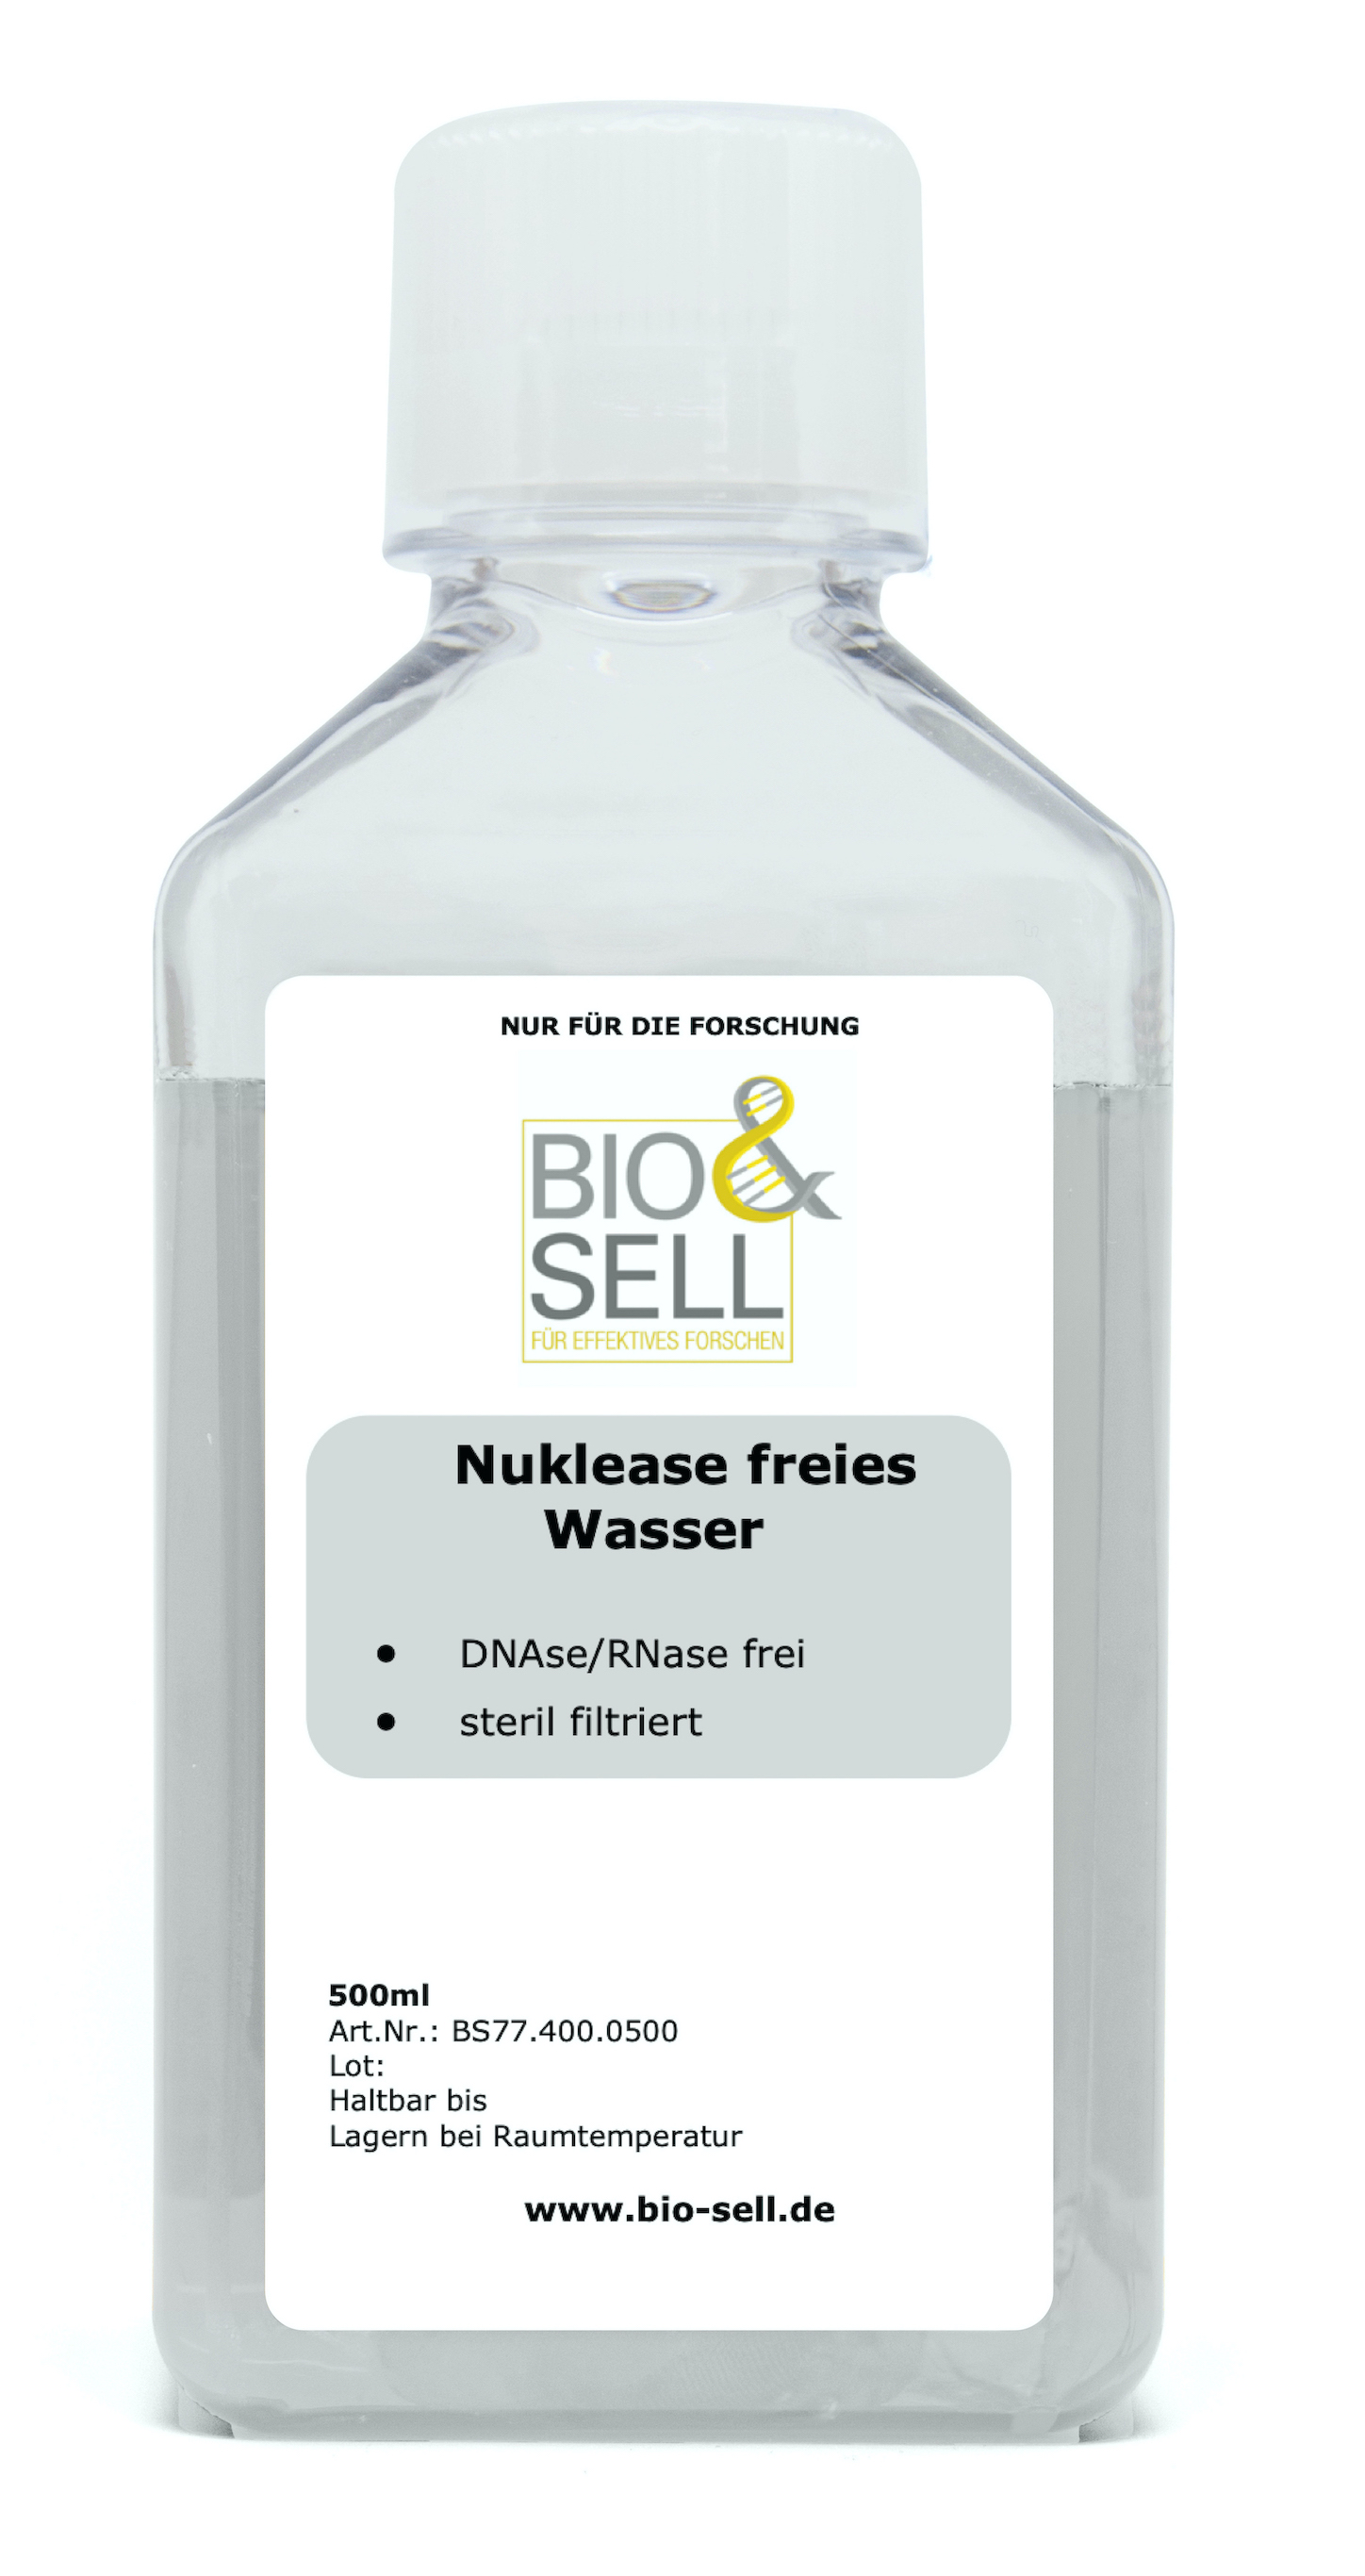 Nuklease freies Wasser BioSELL